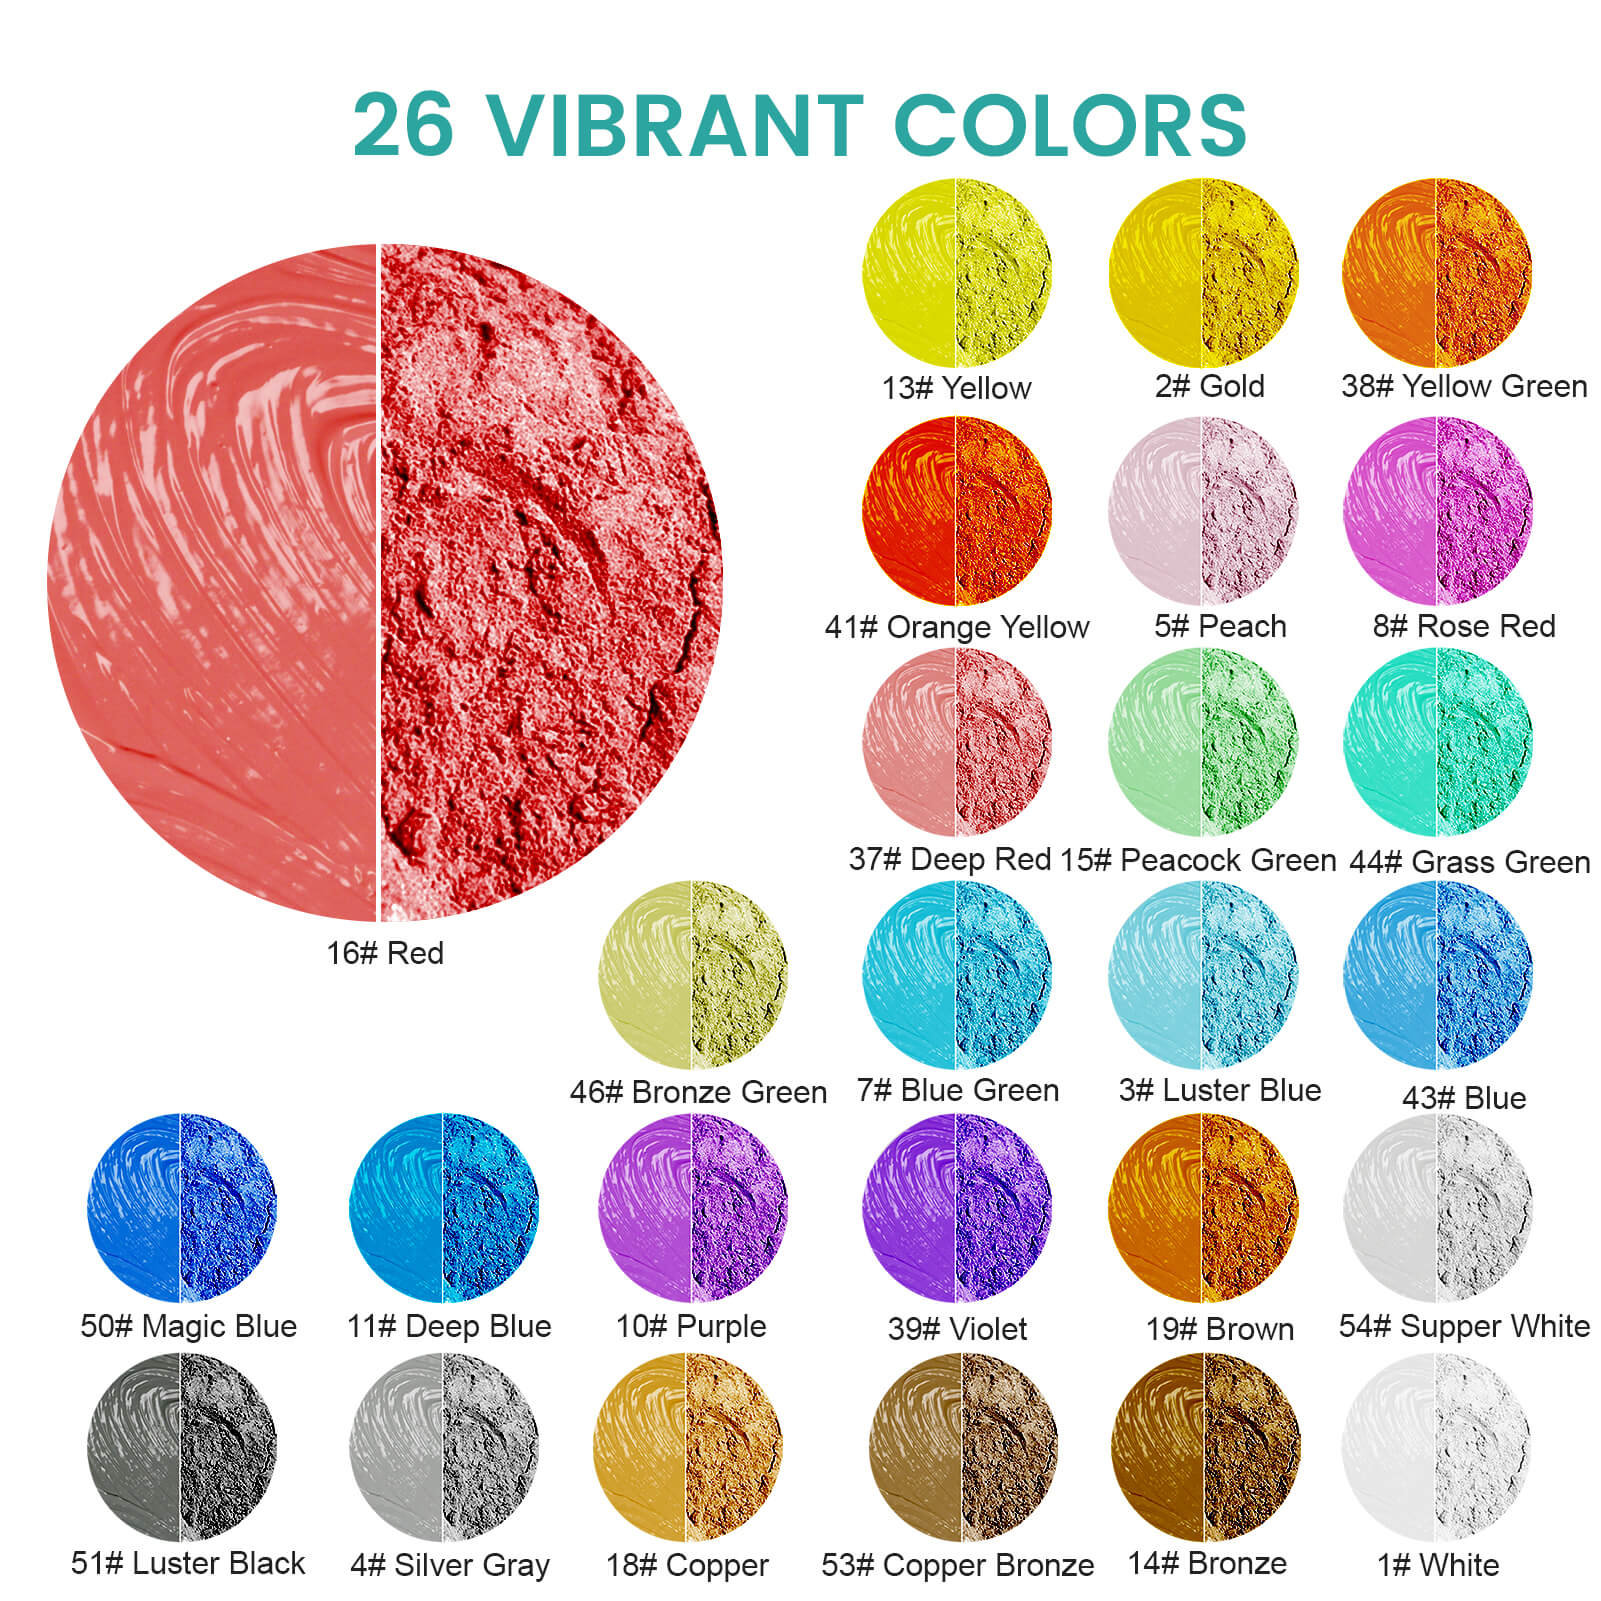 Resiners Epoxy Resin Dye - 20 Colors Resin Pigment Comoros